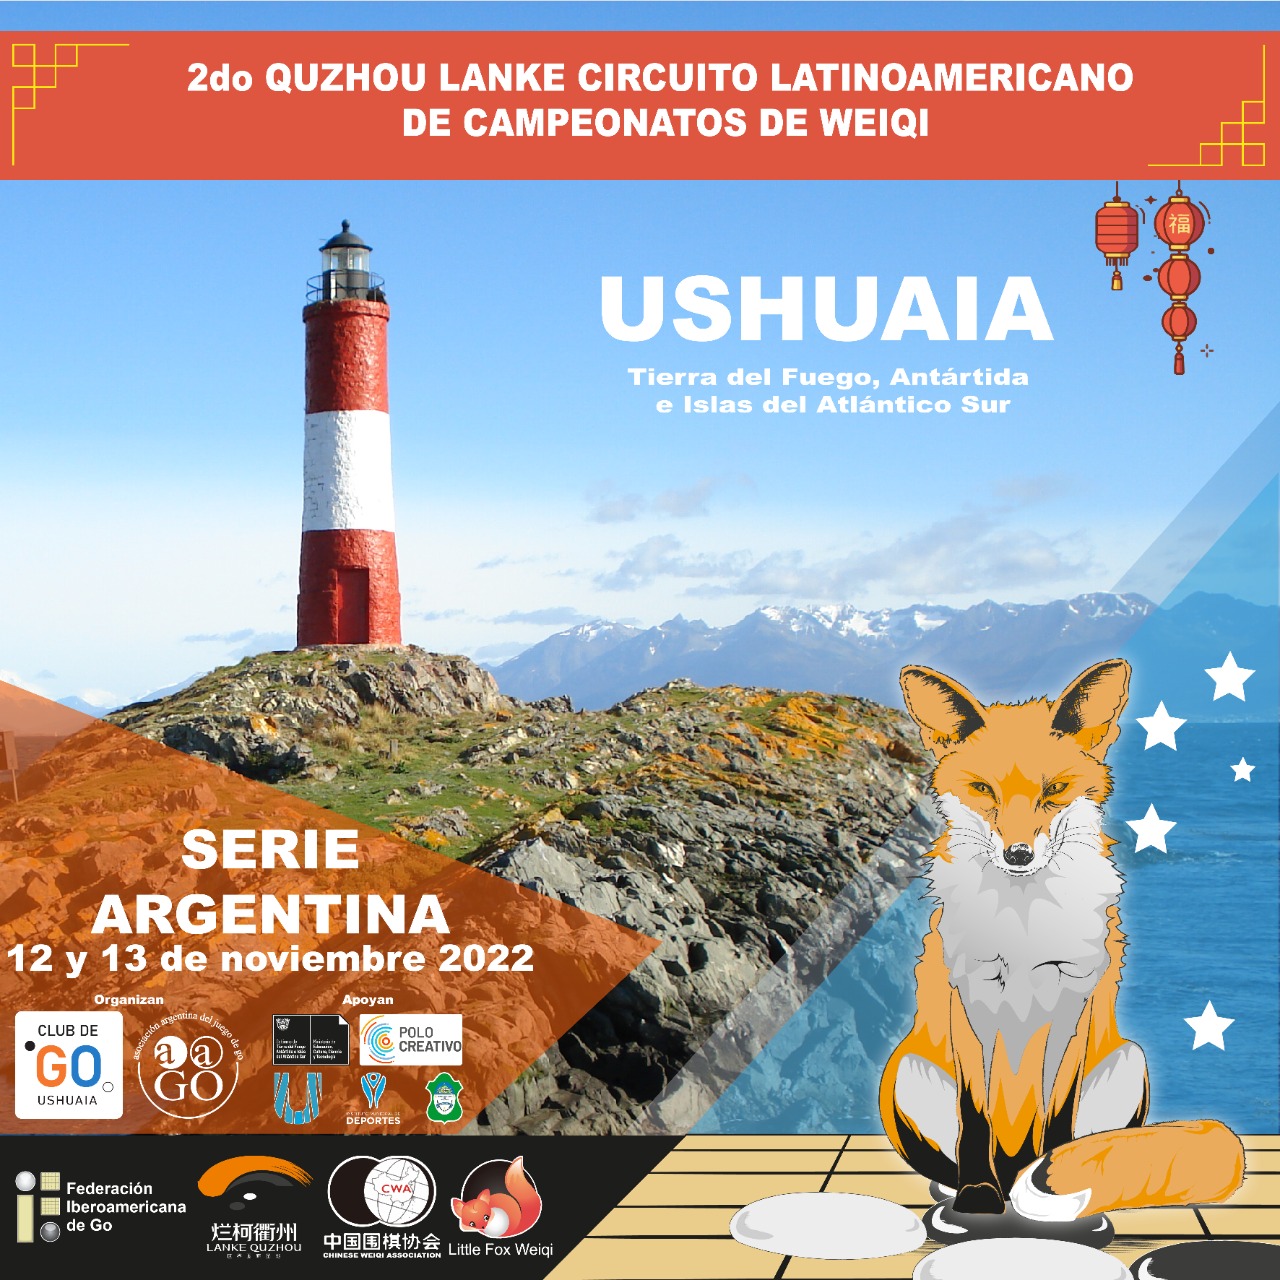 Serie Argentina - 2.º Quzhou Lanke Circuito Latinoamericano de Campeonatos de Weiqi